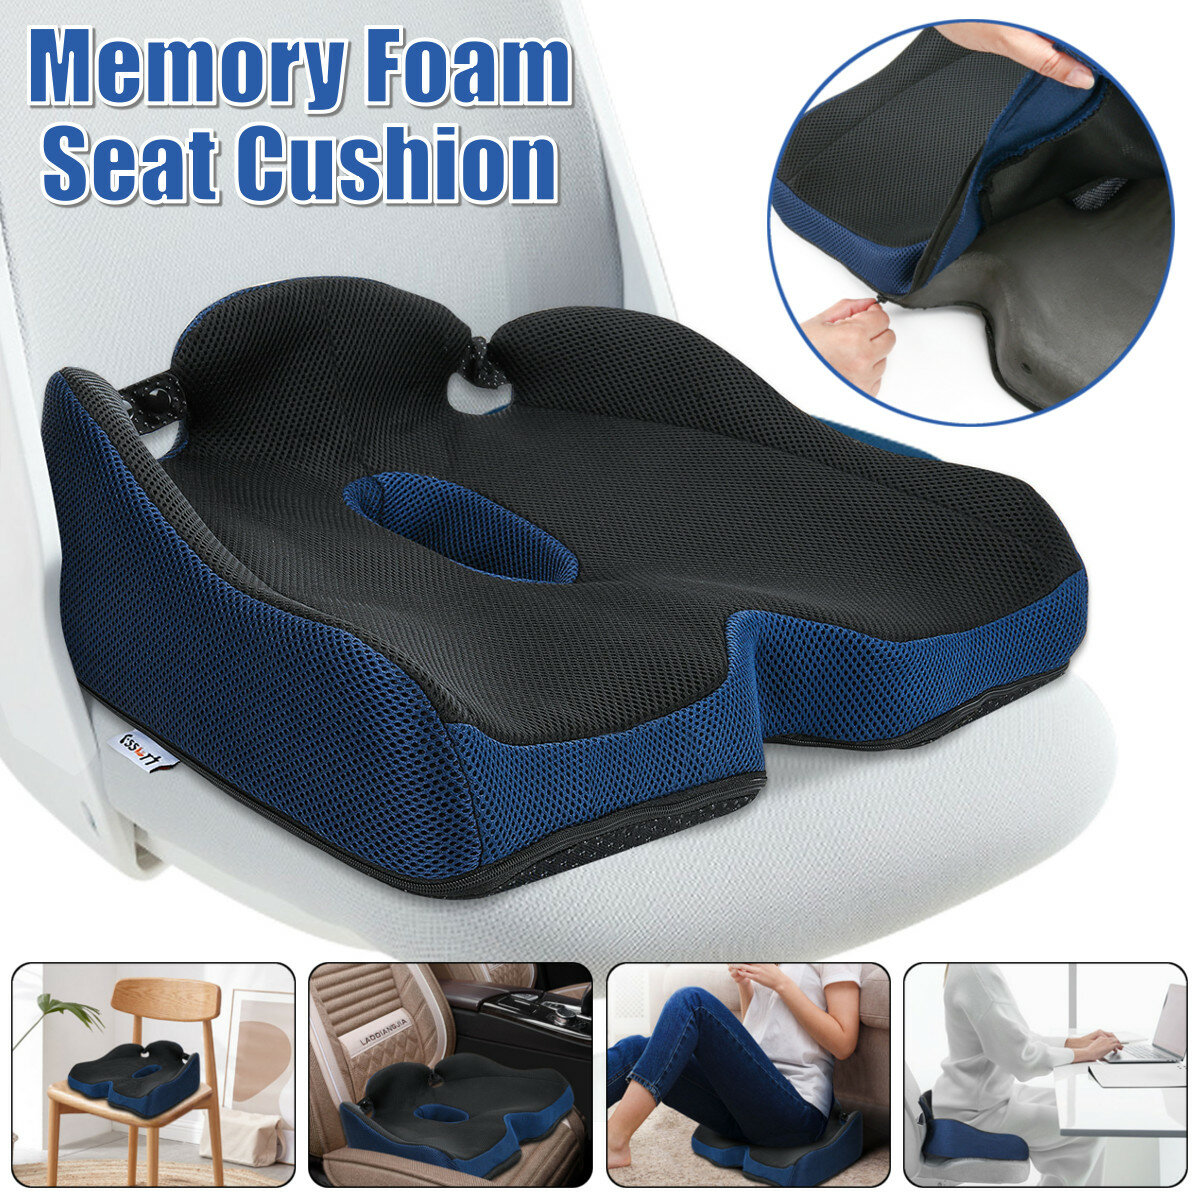 ESSORT Seat Cushion Ergonomic Memory Foam Seat Cushion Washable Comfort Seat Cushion